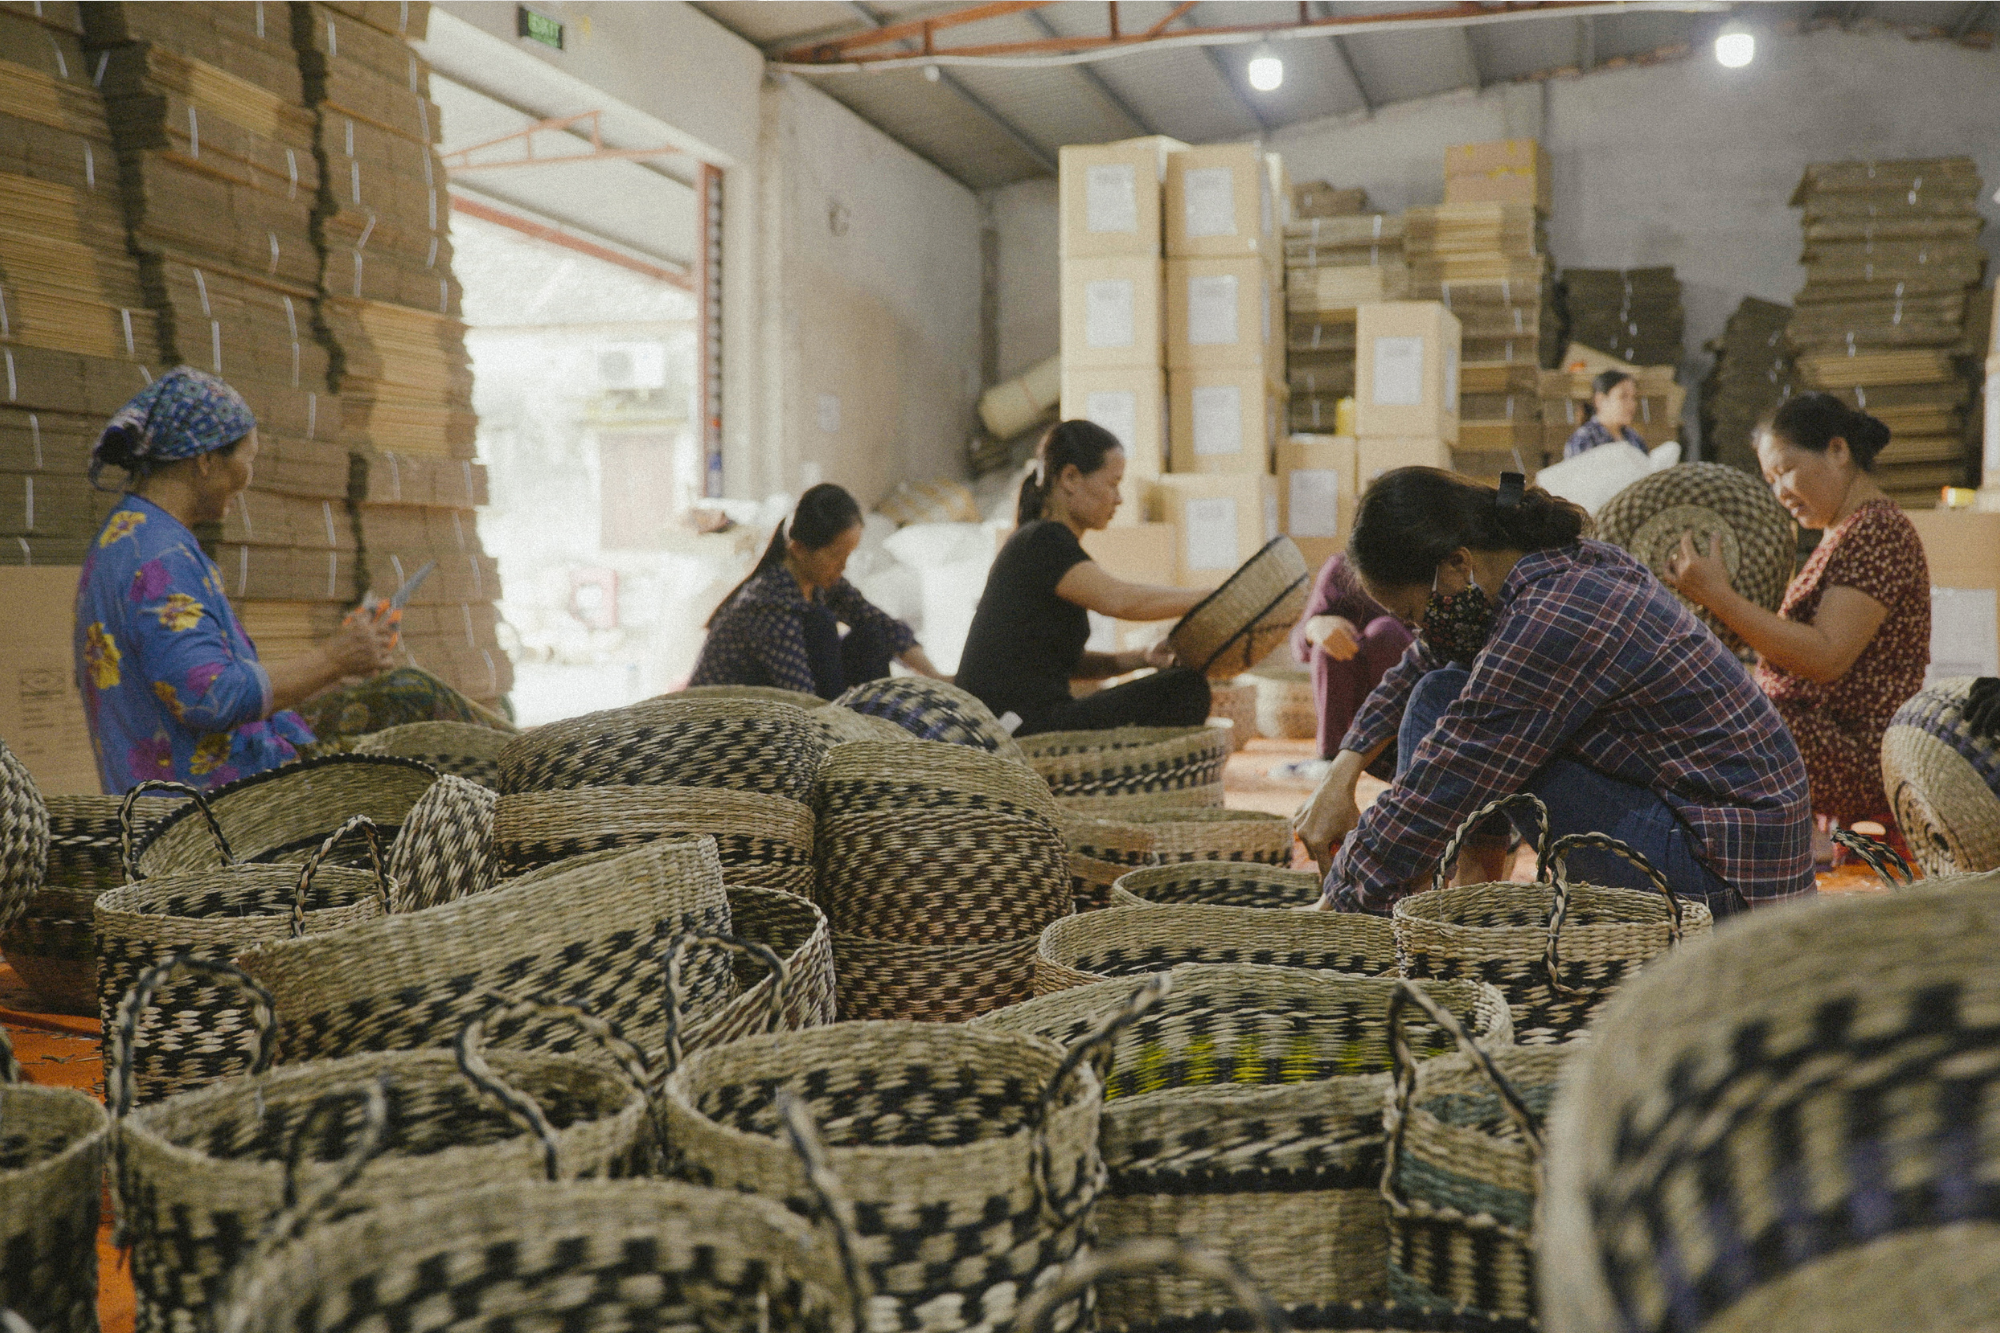 baskets-handcrafted-in-vietnam